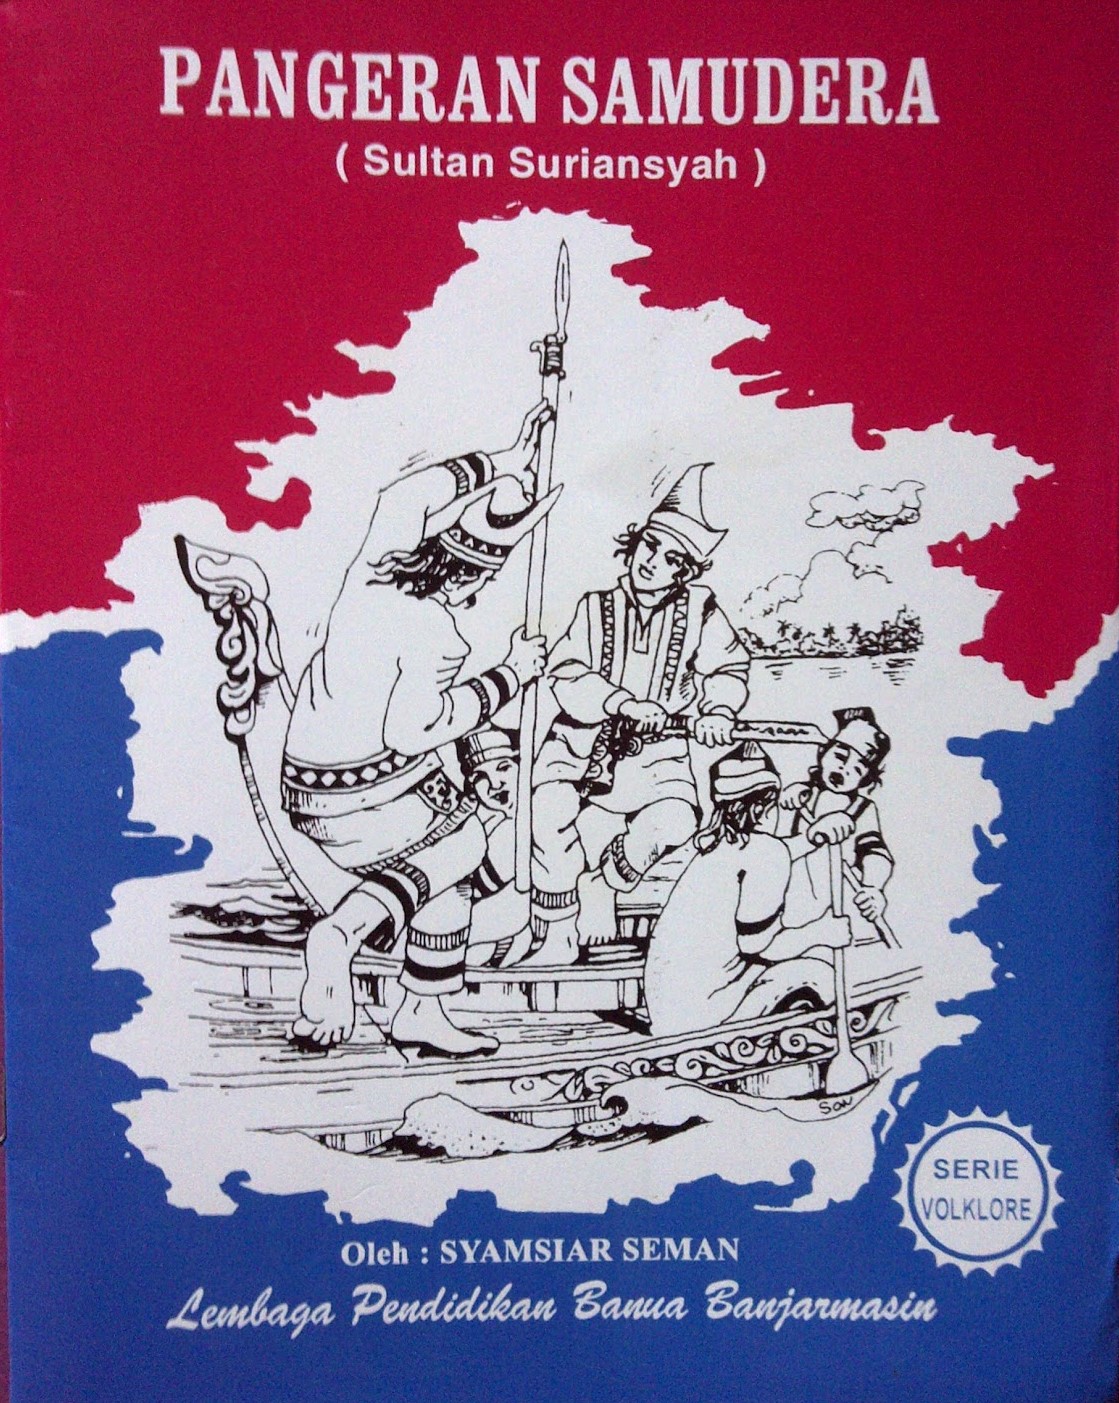 Pangeran Samudra (Sultan Suriansyah)